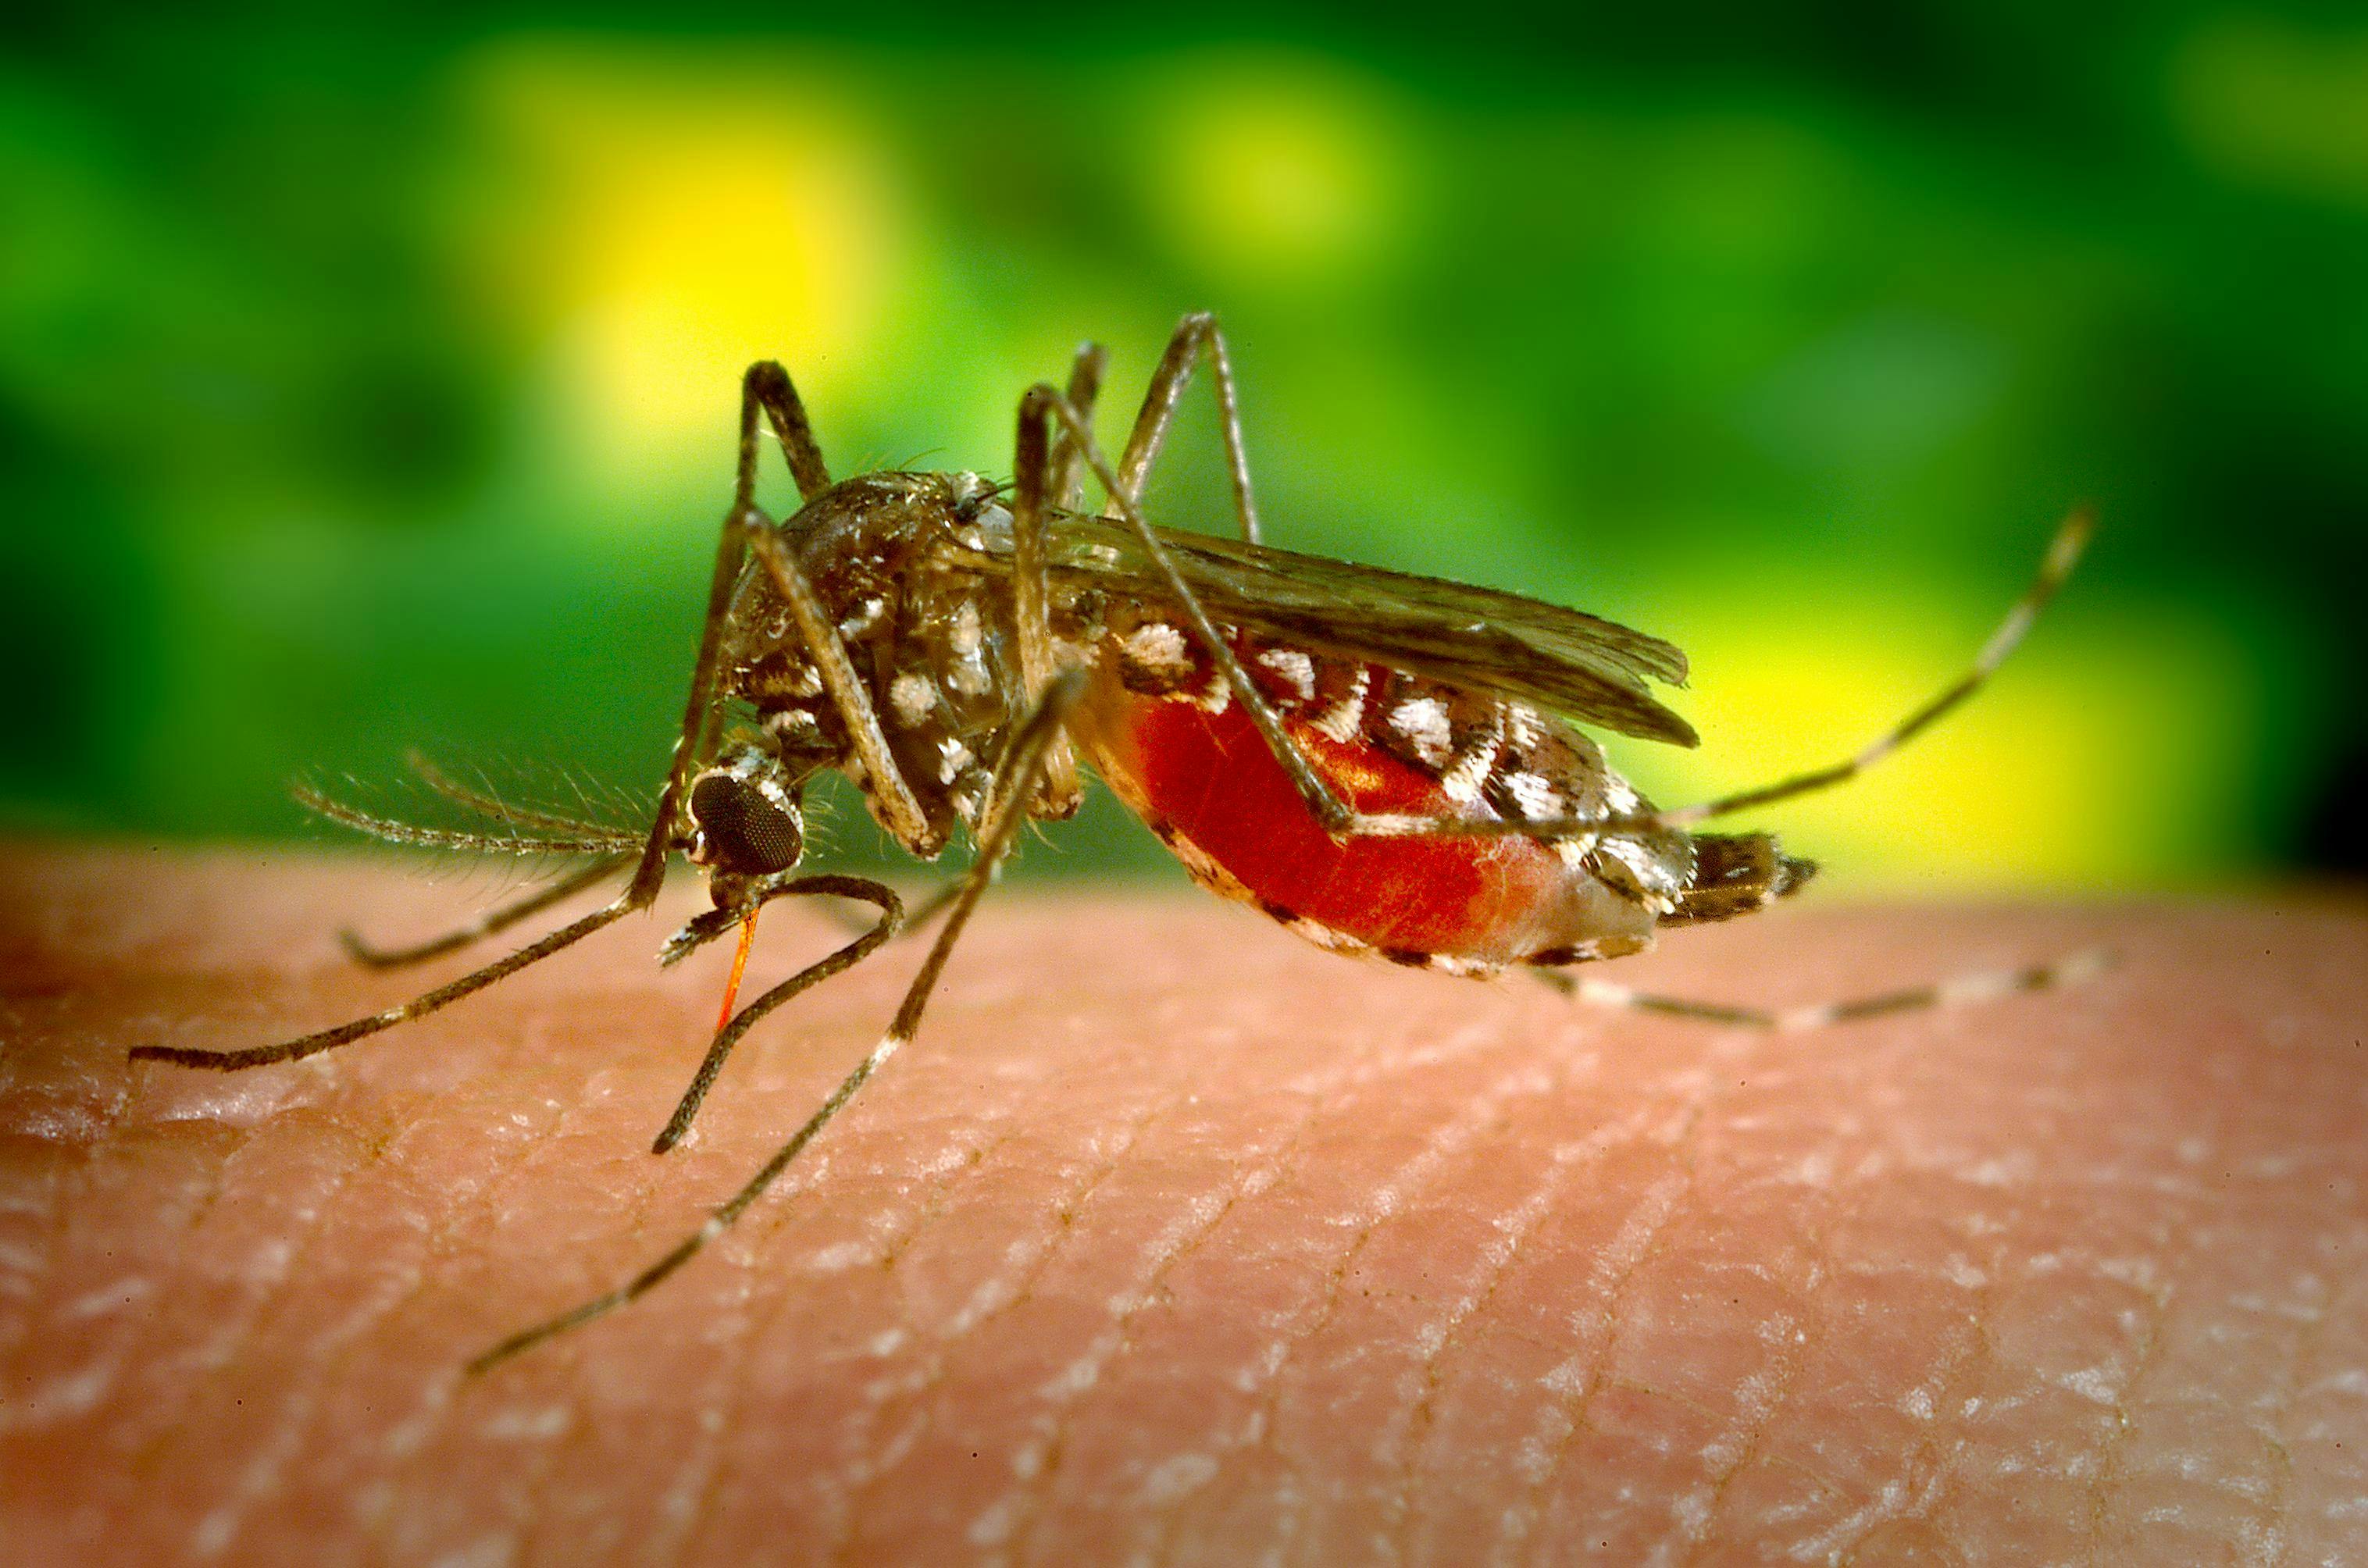 Can We Decrease Dengue Transmission by Understanding Climate Factors?